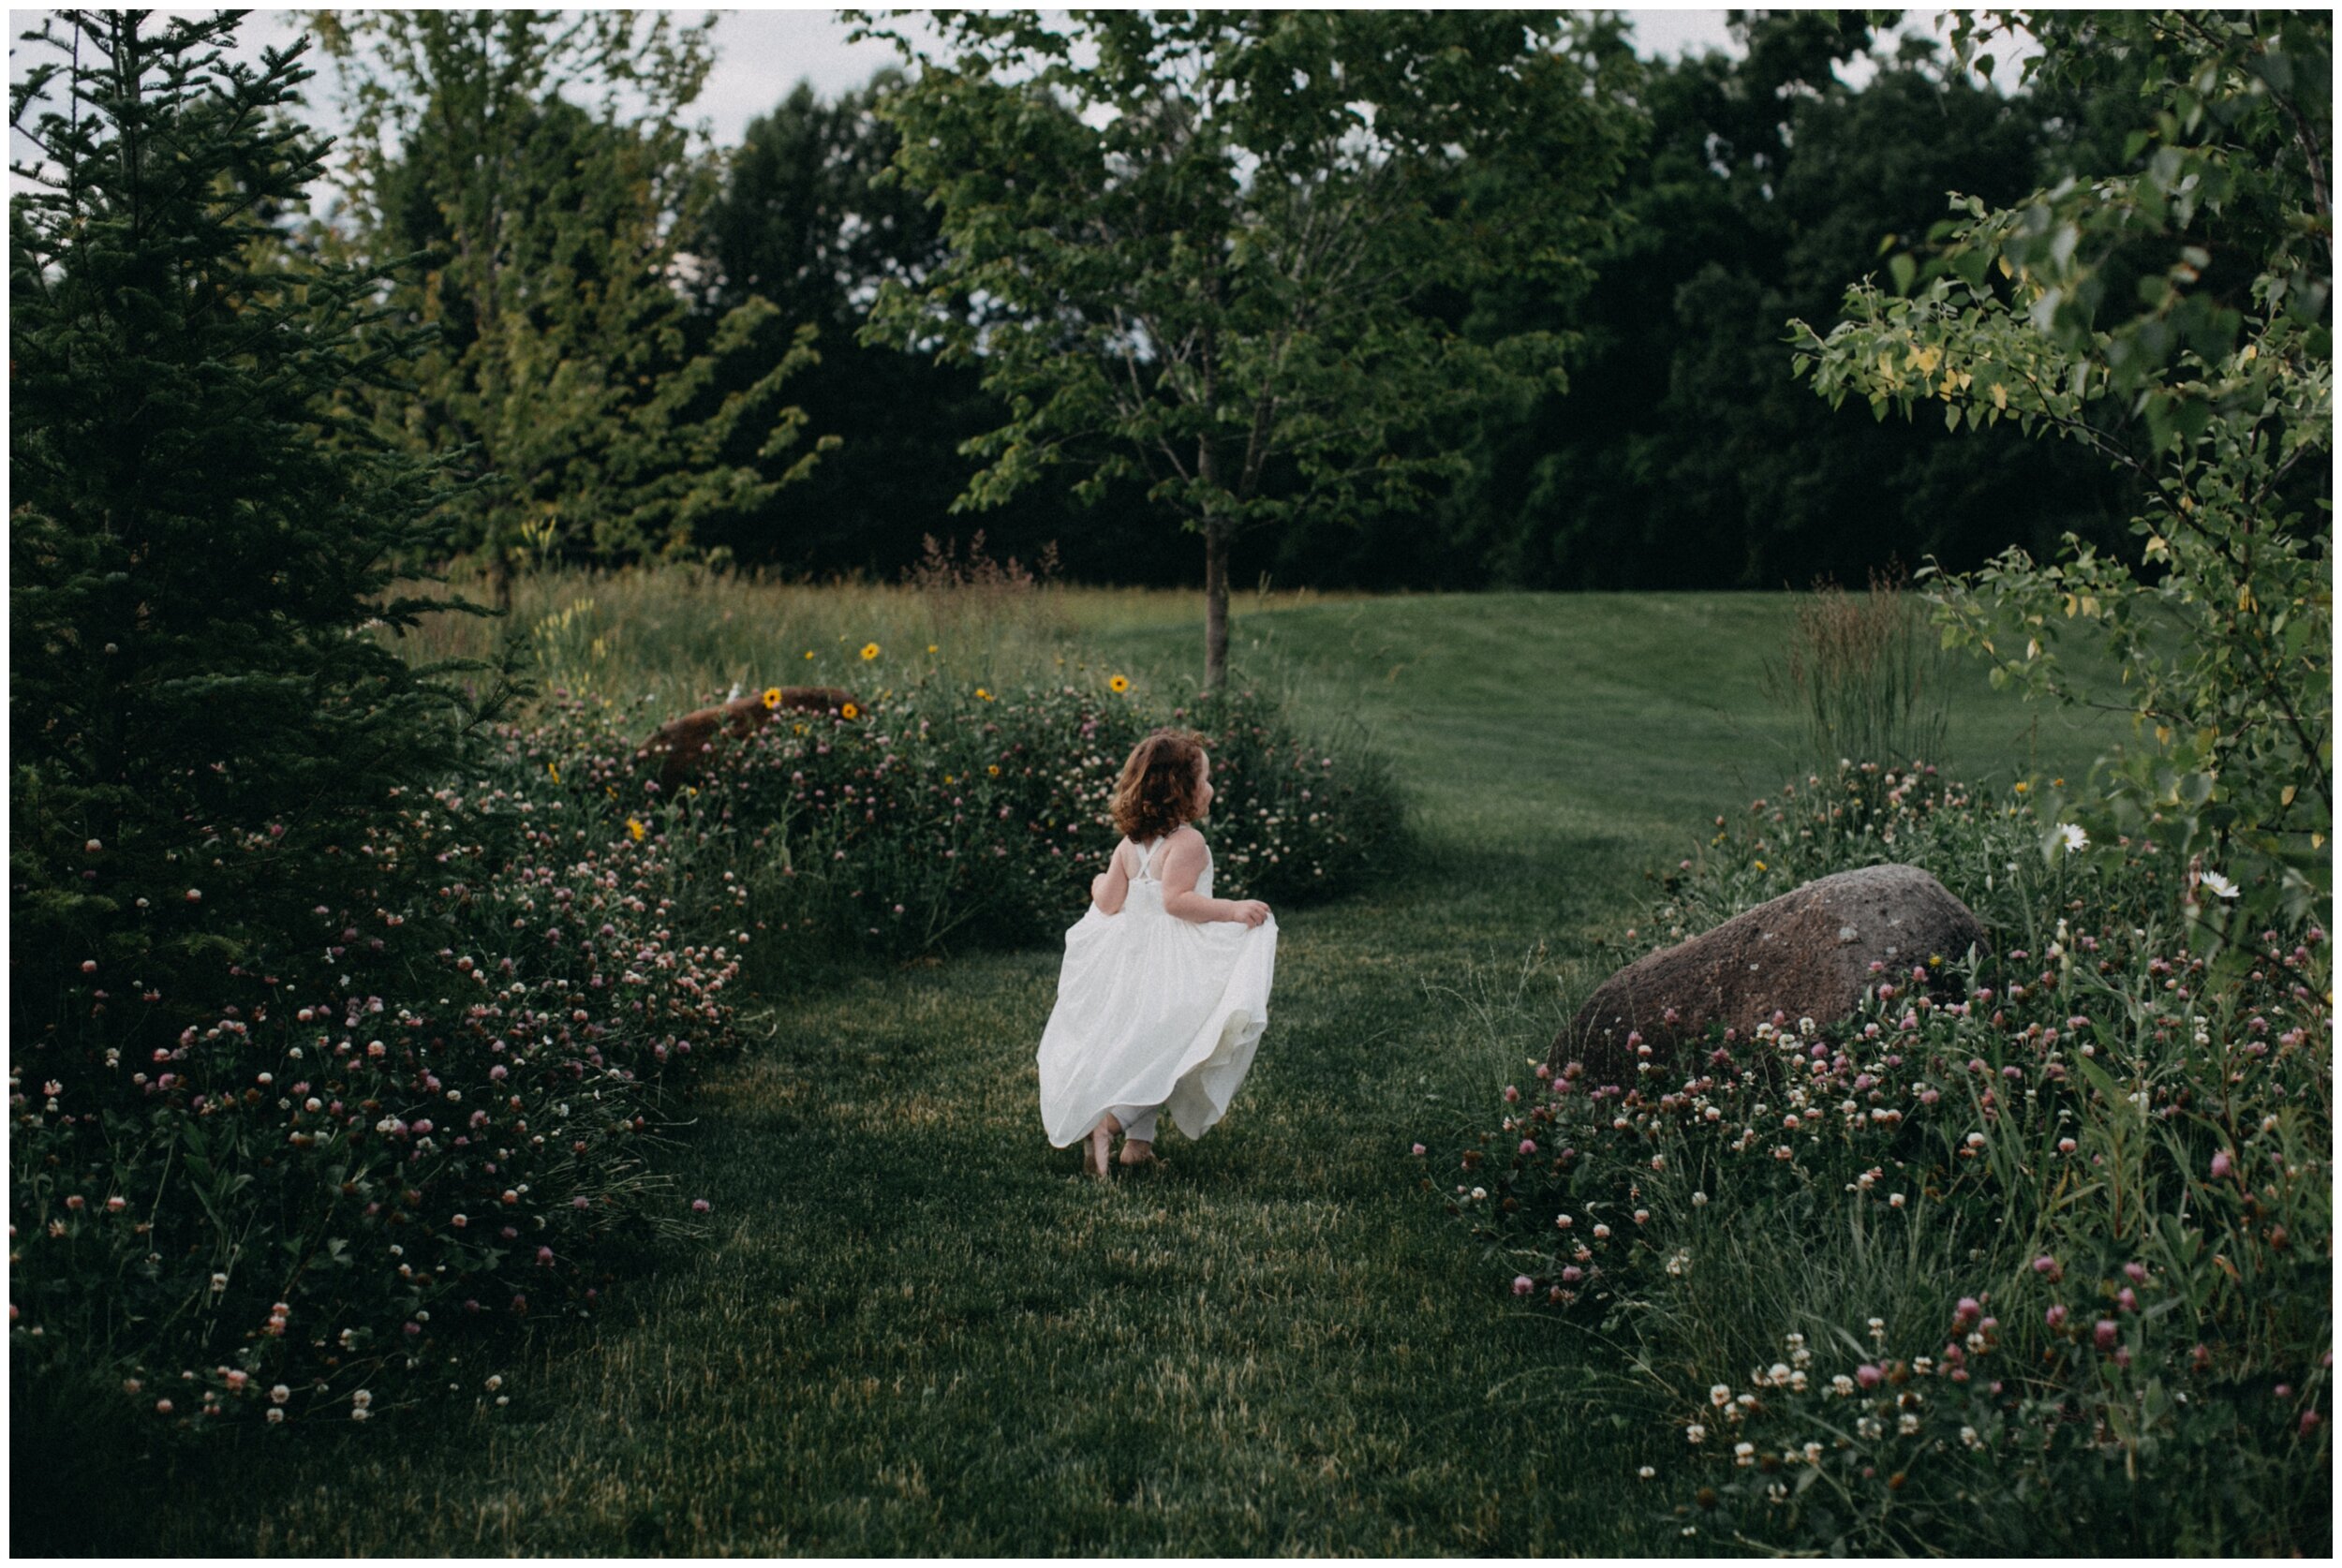 Flower girl walking in garden during outdoor wedding reception